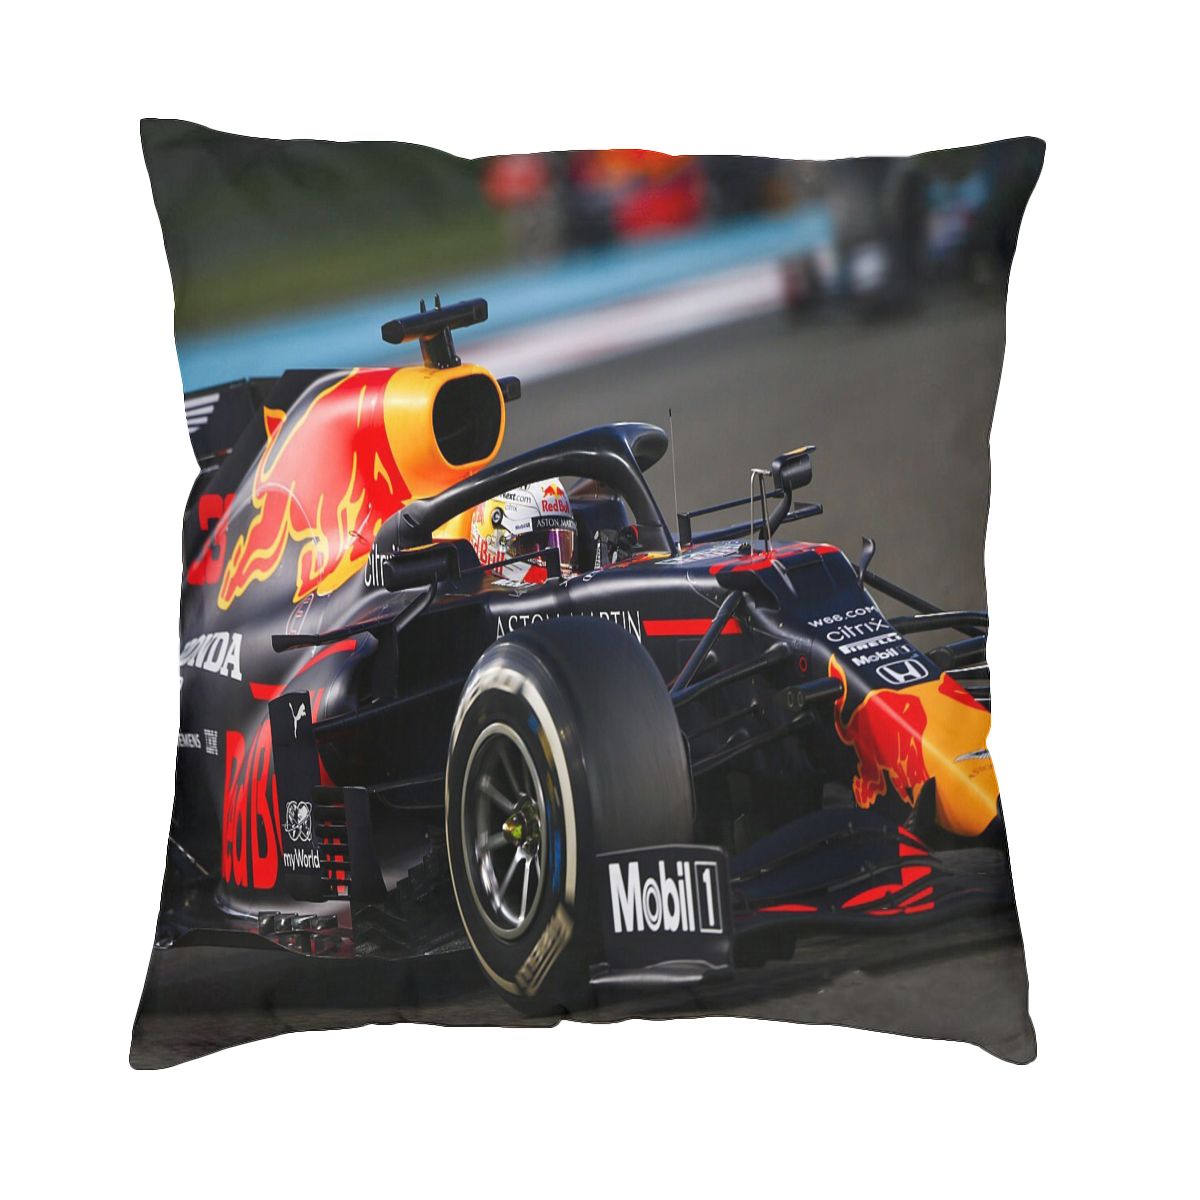 F1 Redbull Racing Team Cushion Cover Home Decor Fan Merchandise Great Gift